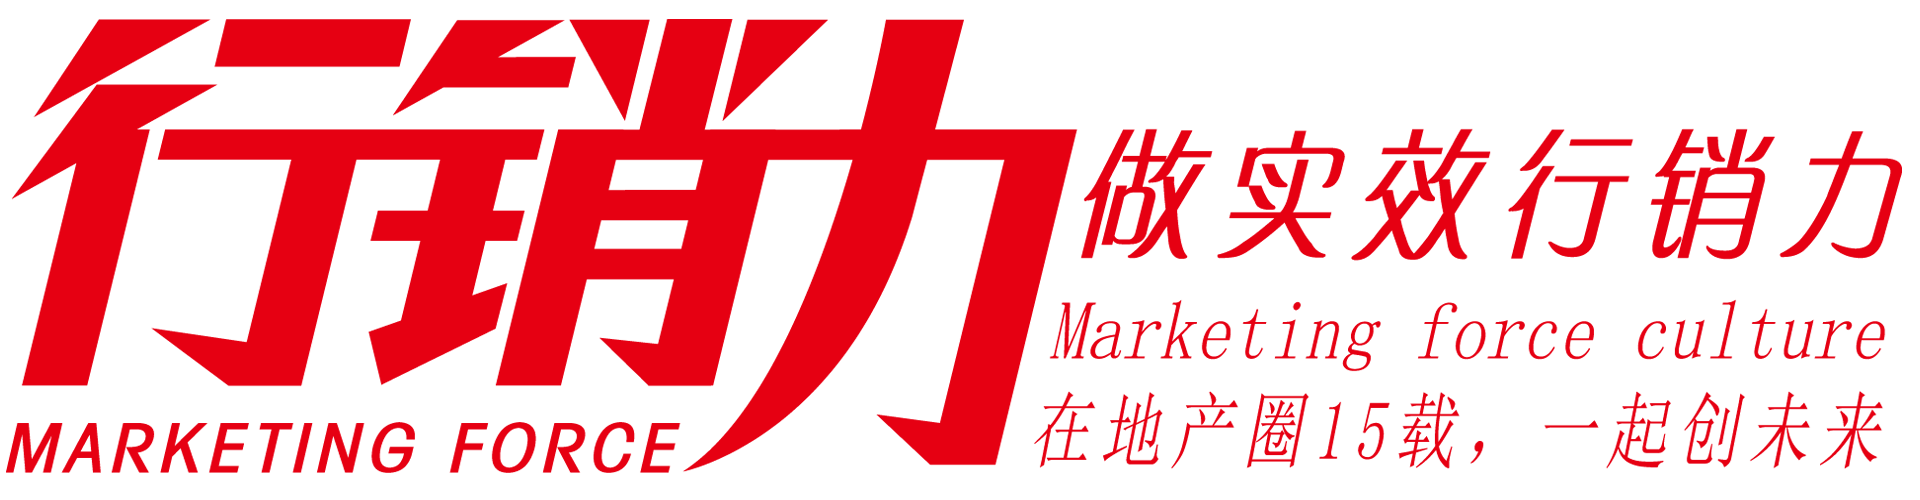 行销力logo.png